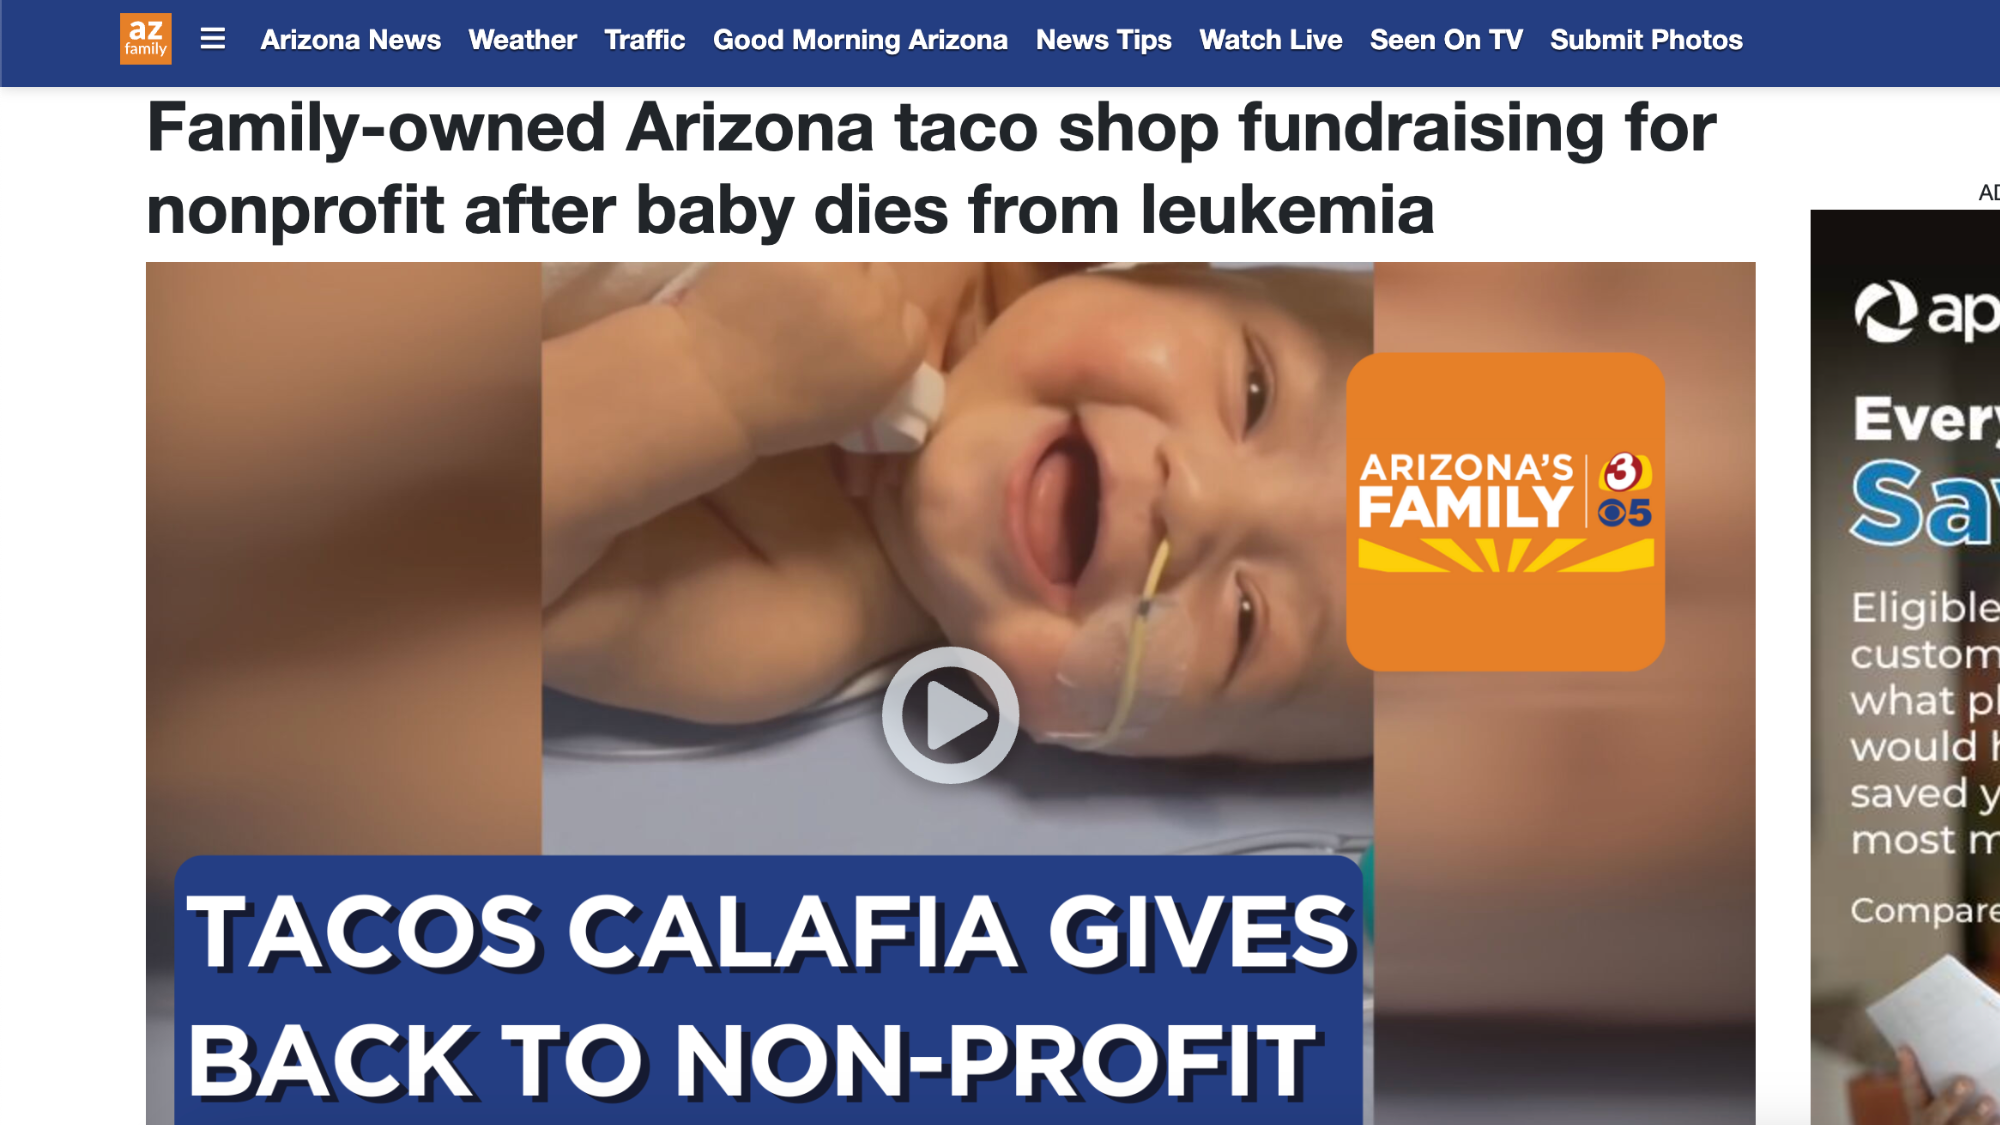 Arizona Family: "Family-owned Arizona taco shop fundraising for nonprofit after baby dies from leukemia" (Copy)